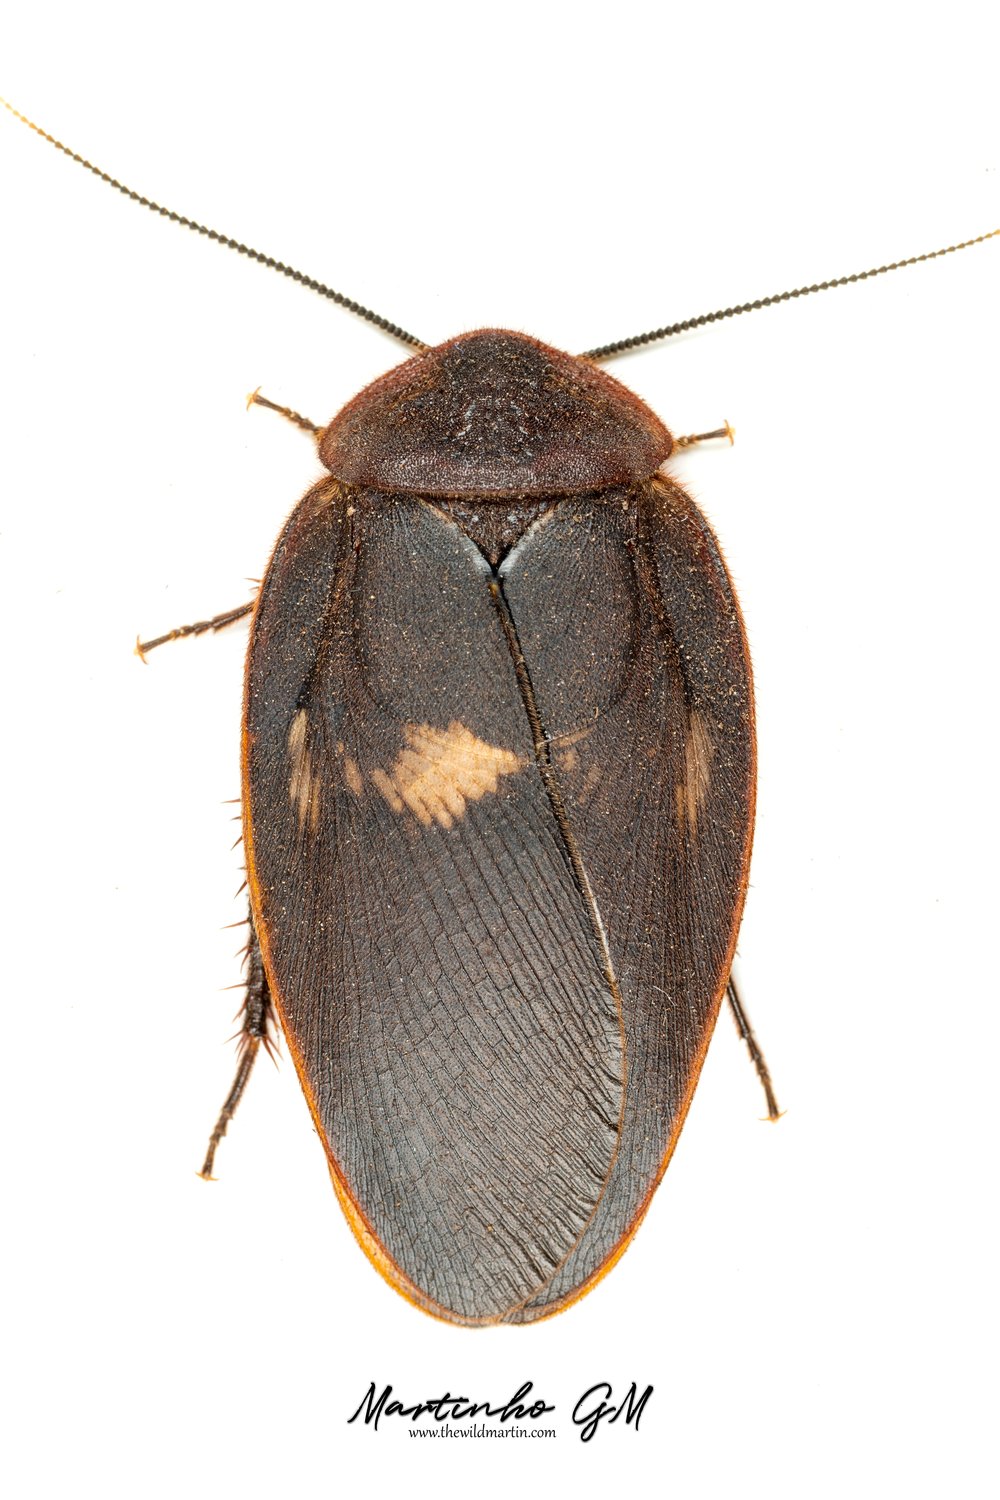 Ergaula silphoides adult male